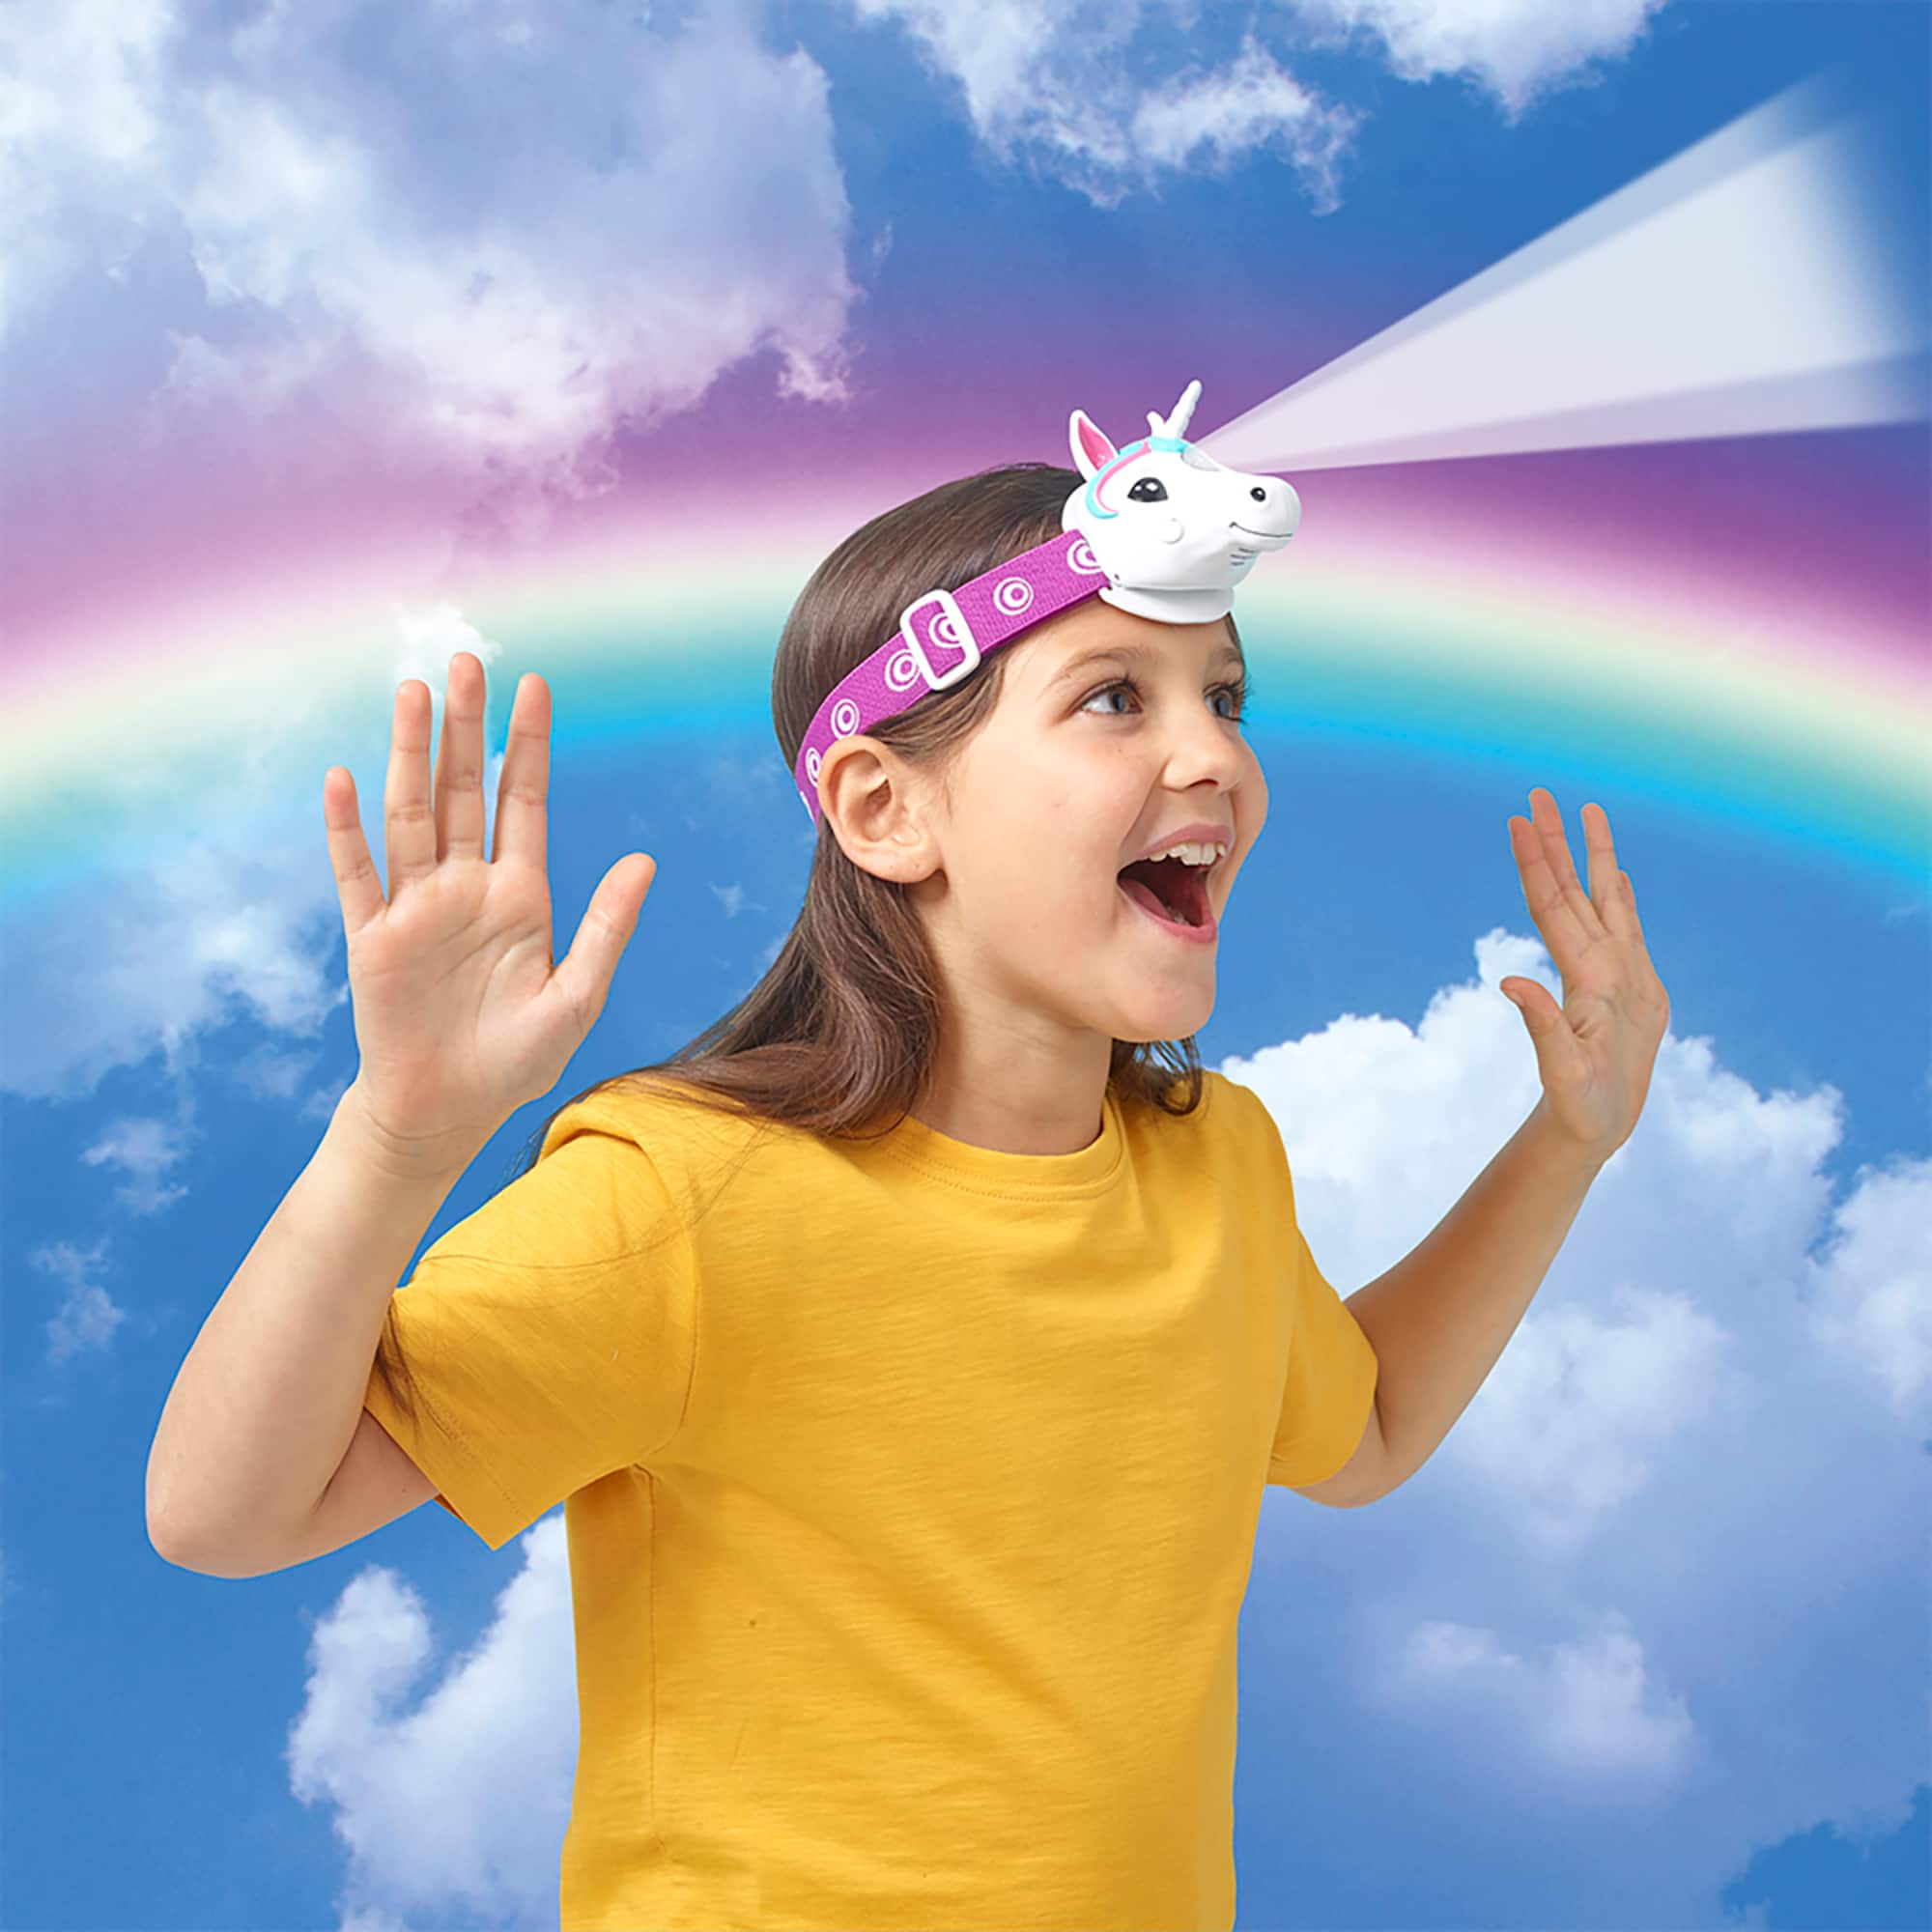 Brainstorm Toys Unicorn Head Flashlight With Light &#x26; Sound